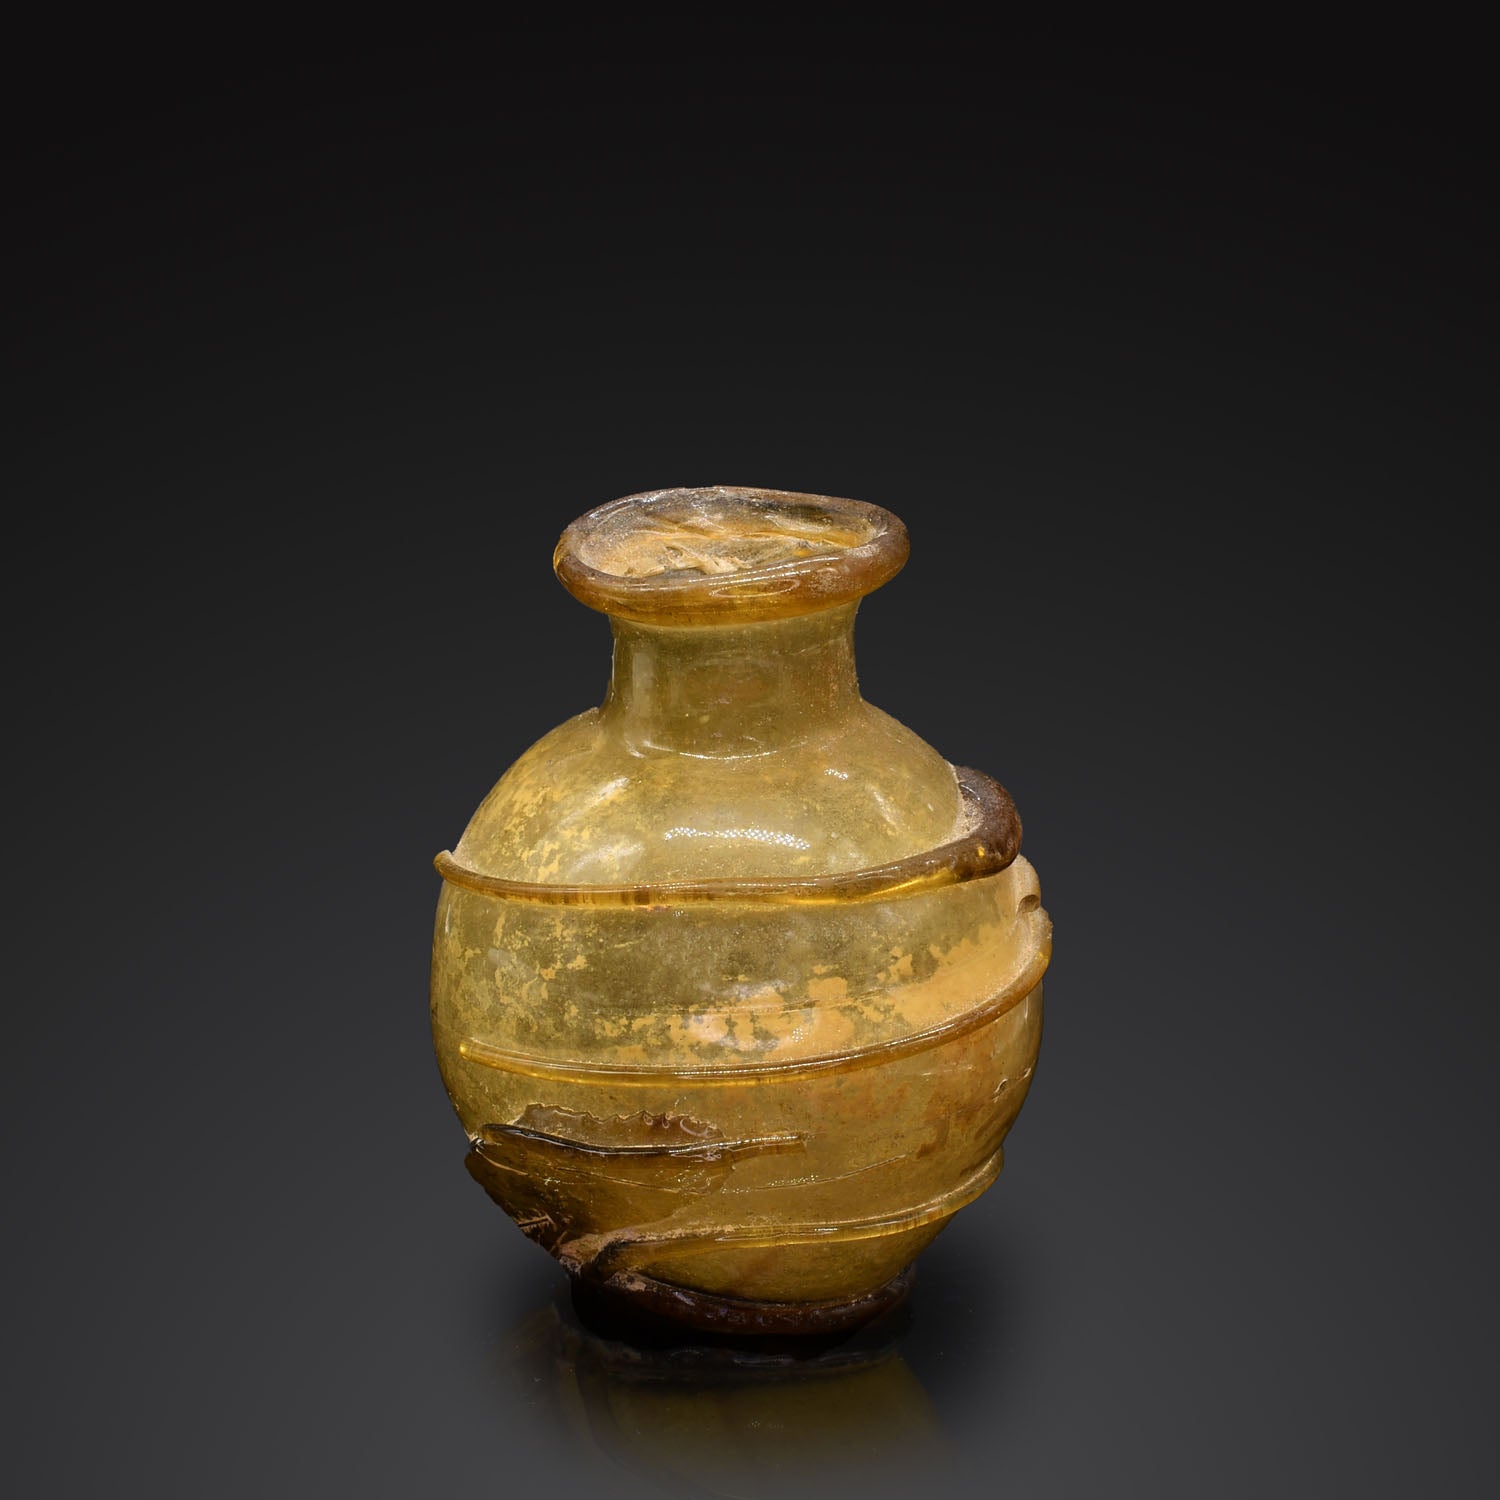 A Roman Amber Glass Bottle, ca. 2nd - 3rd century CE